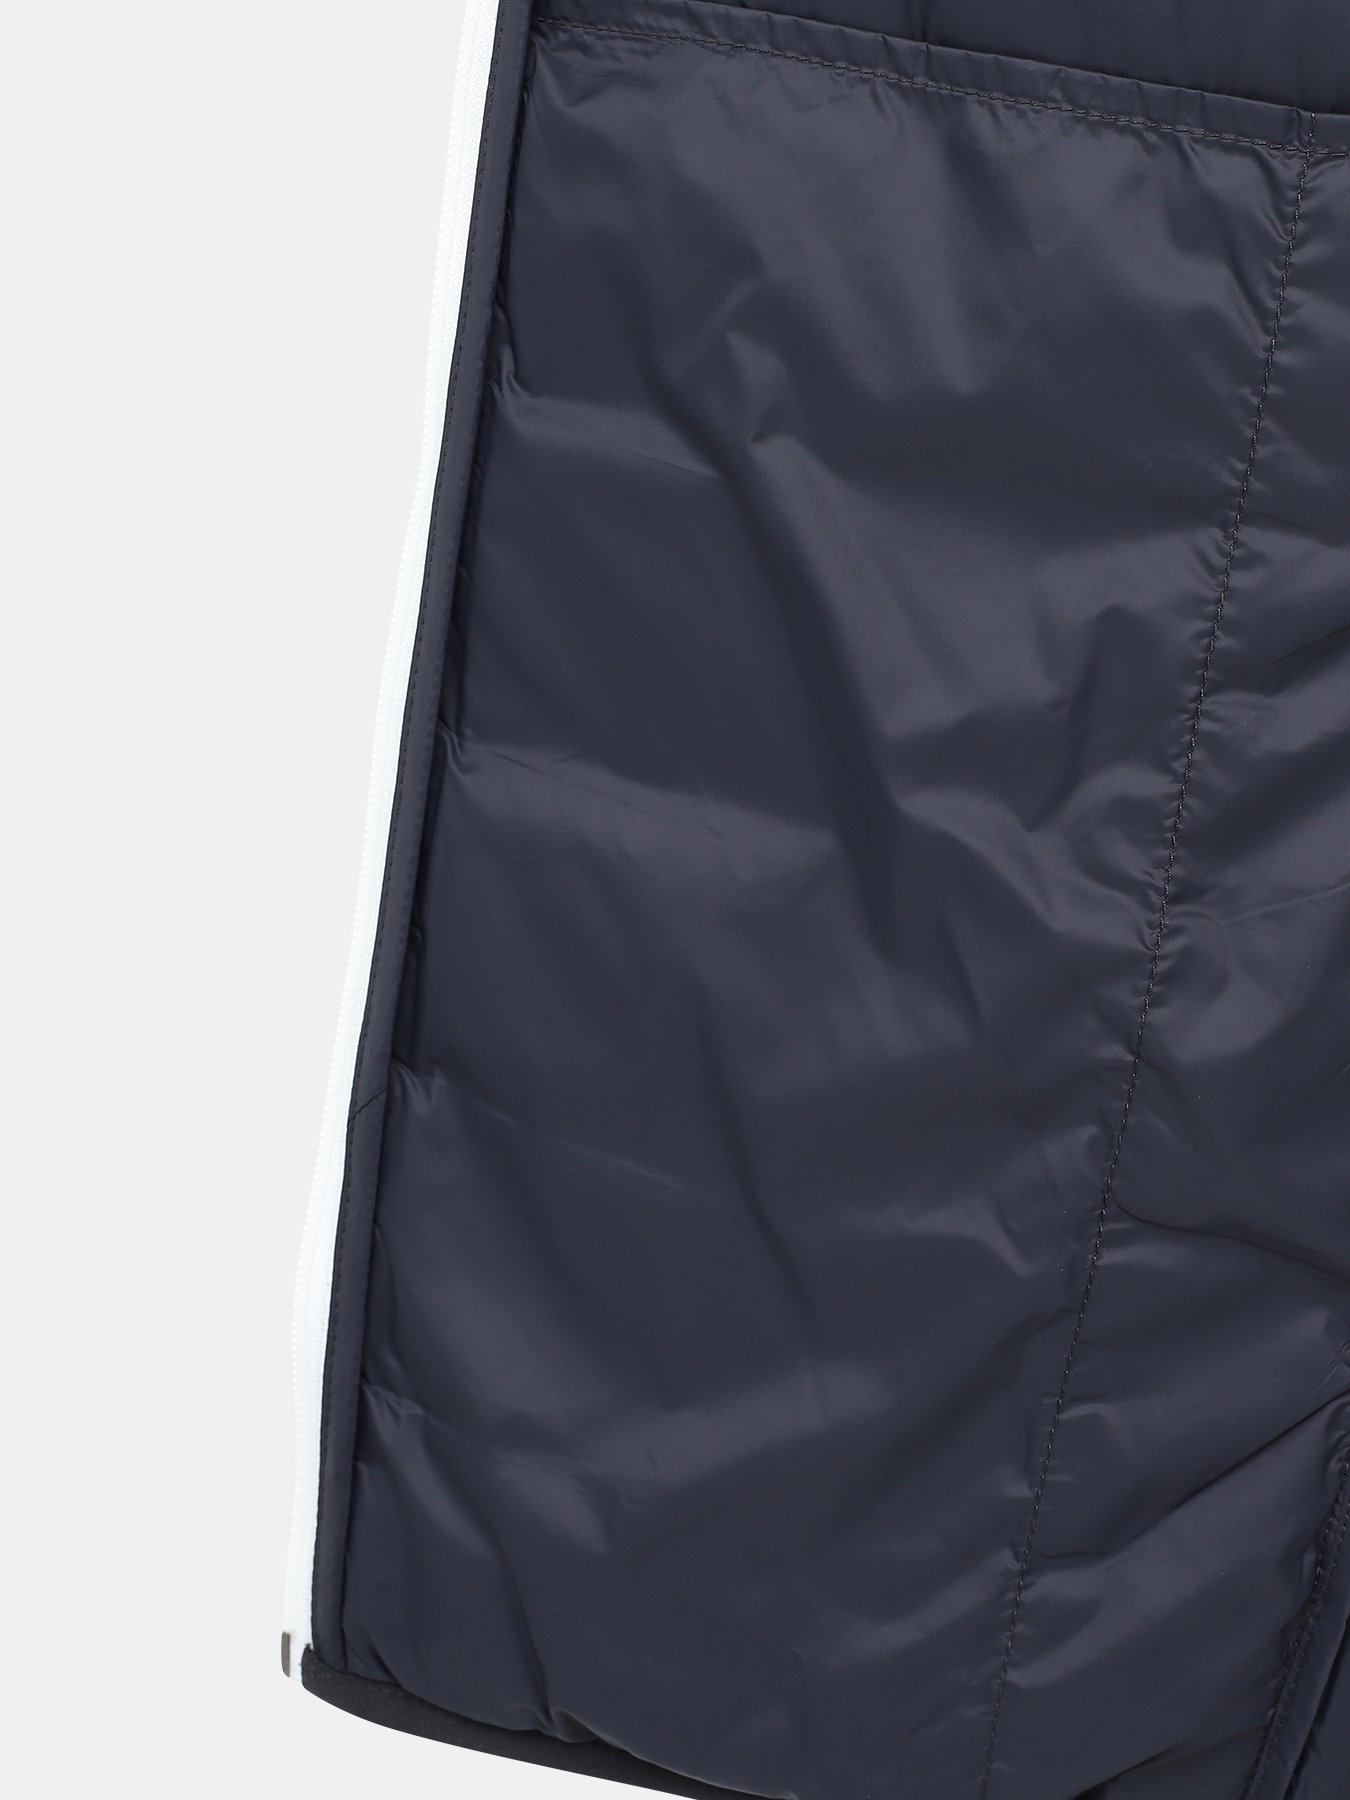 Куртка J Thor BOSS 421191-043, цвет темно-синий, размер 48-50 - фото 5